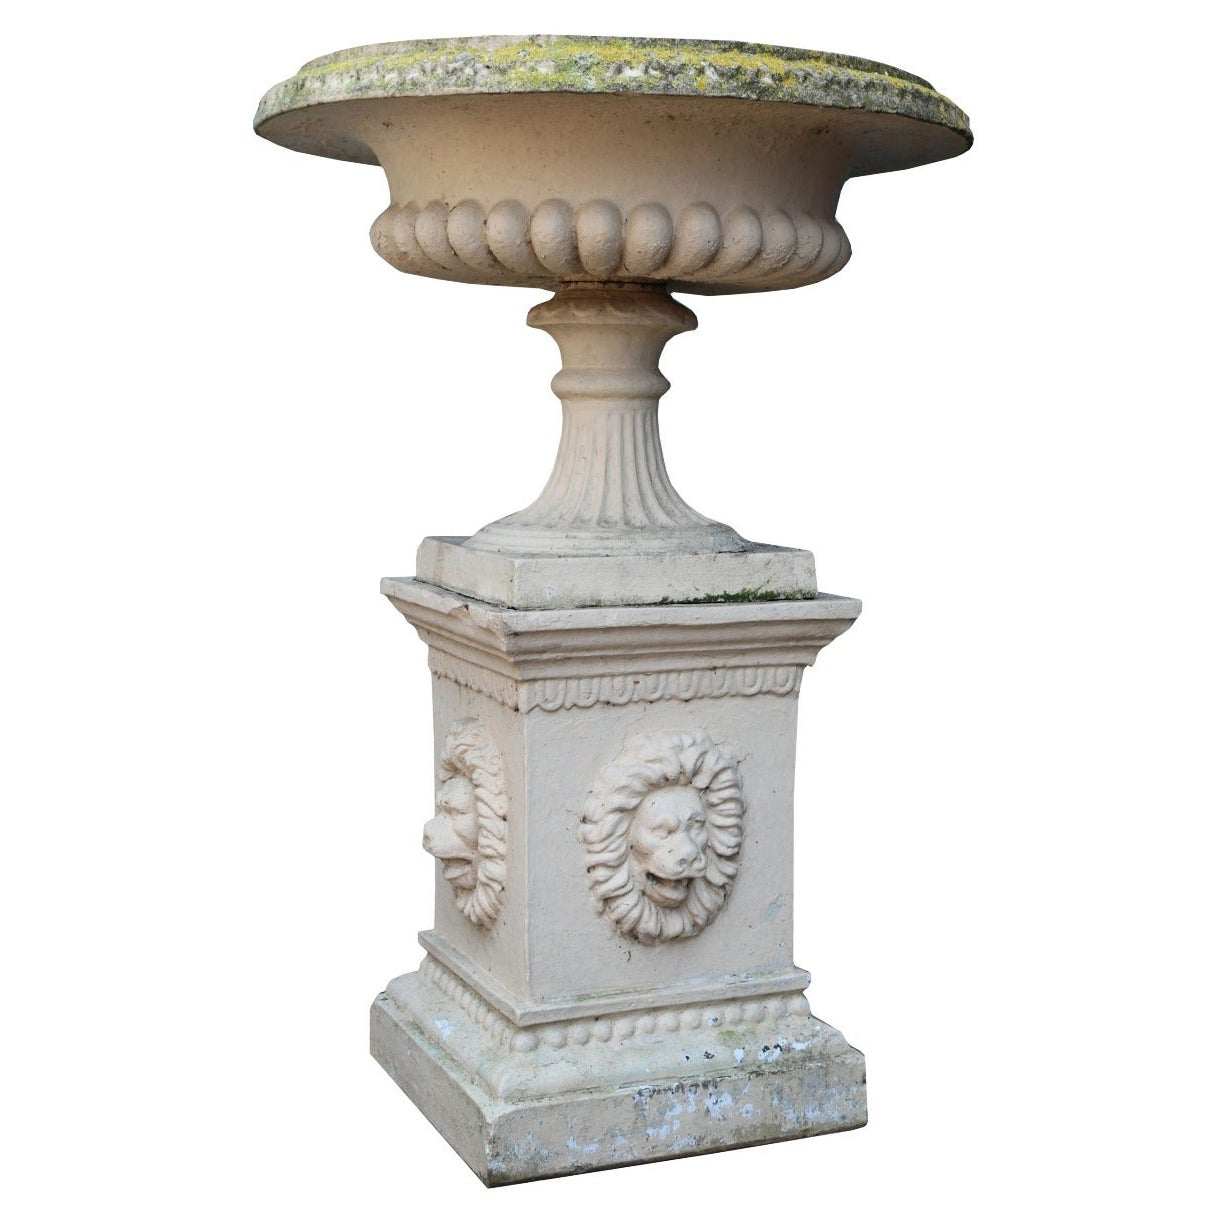 Antique Buff Terracotta Tazza Urn on Pedestal